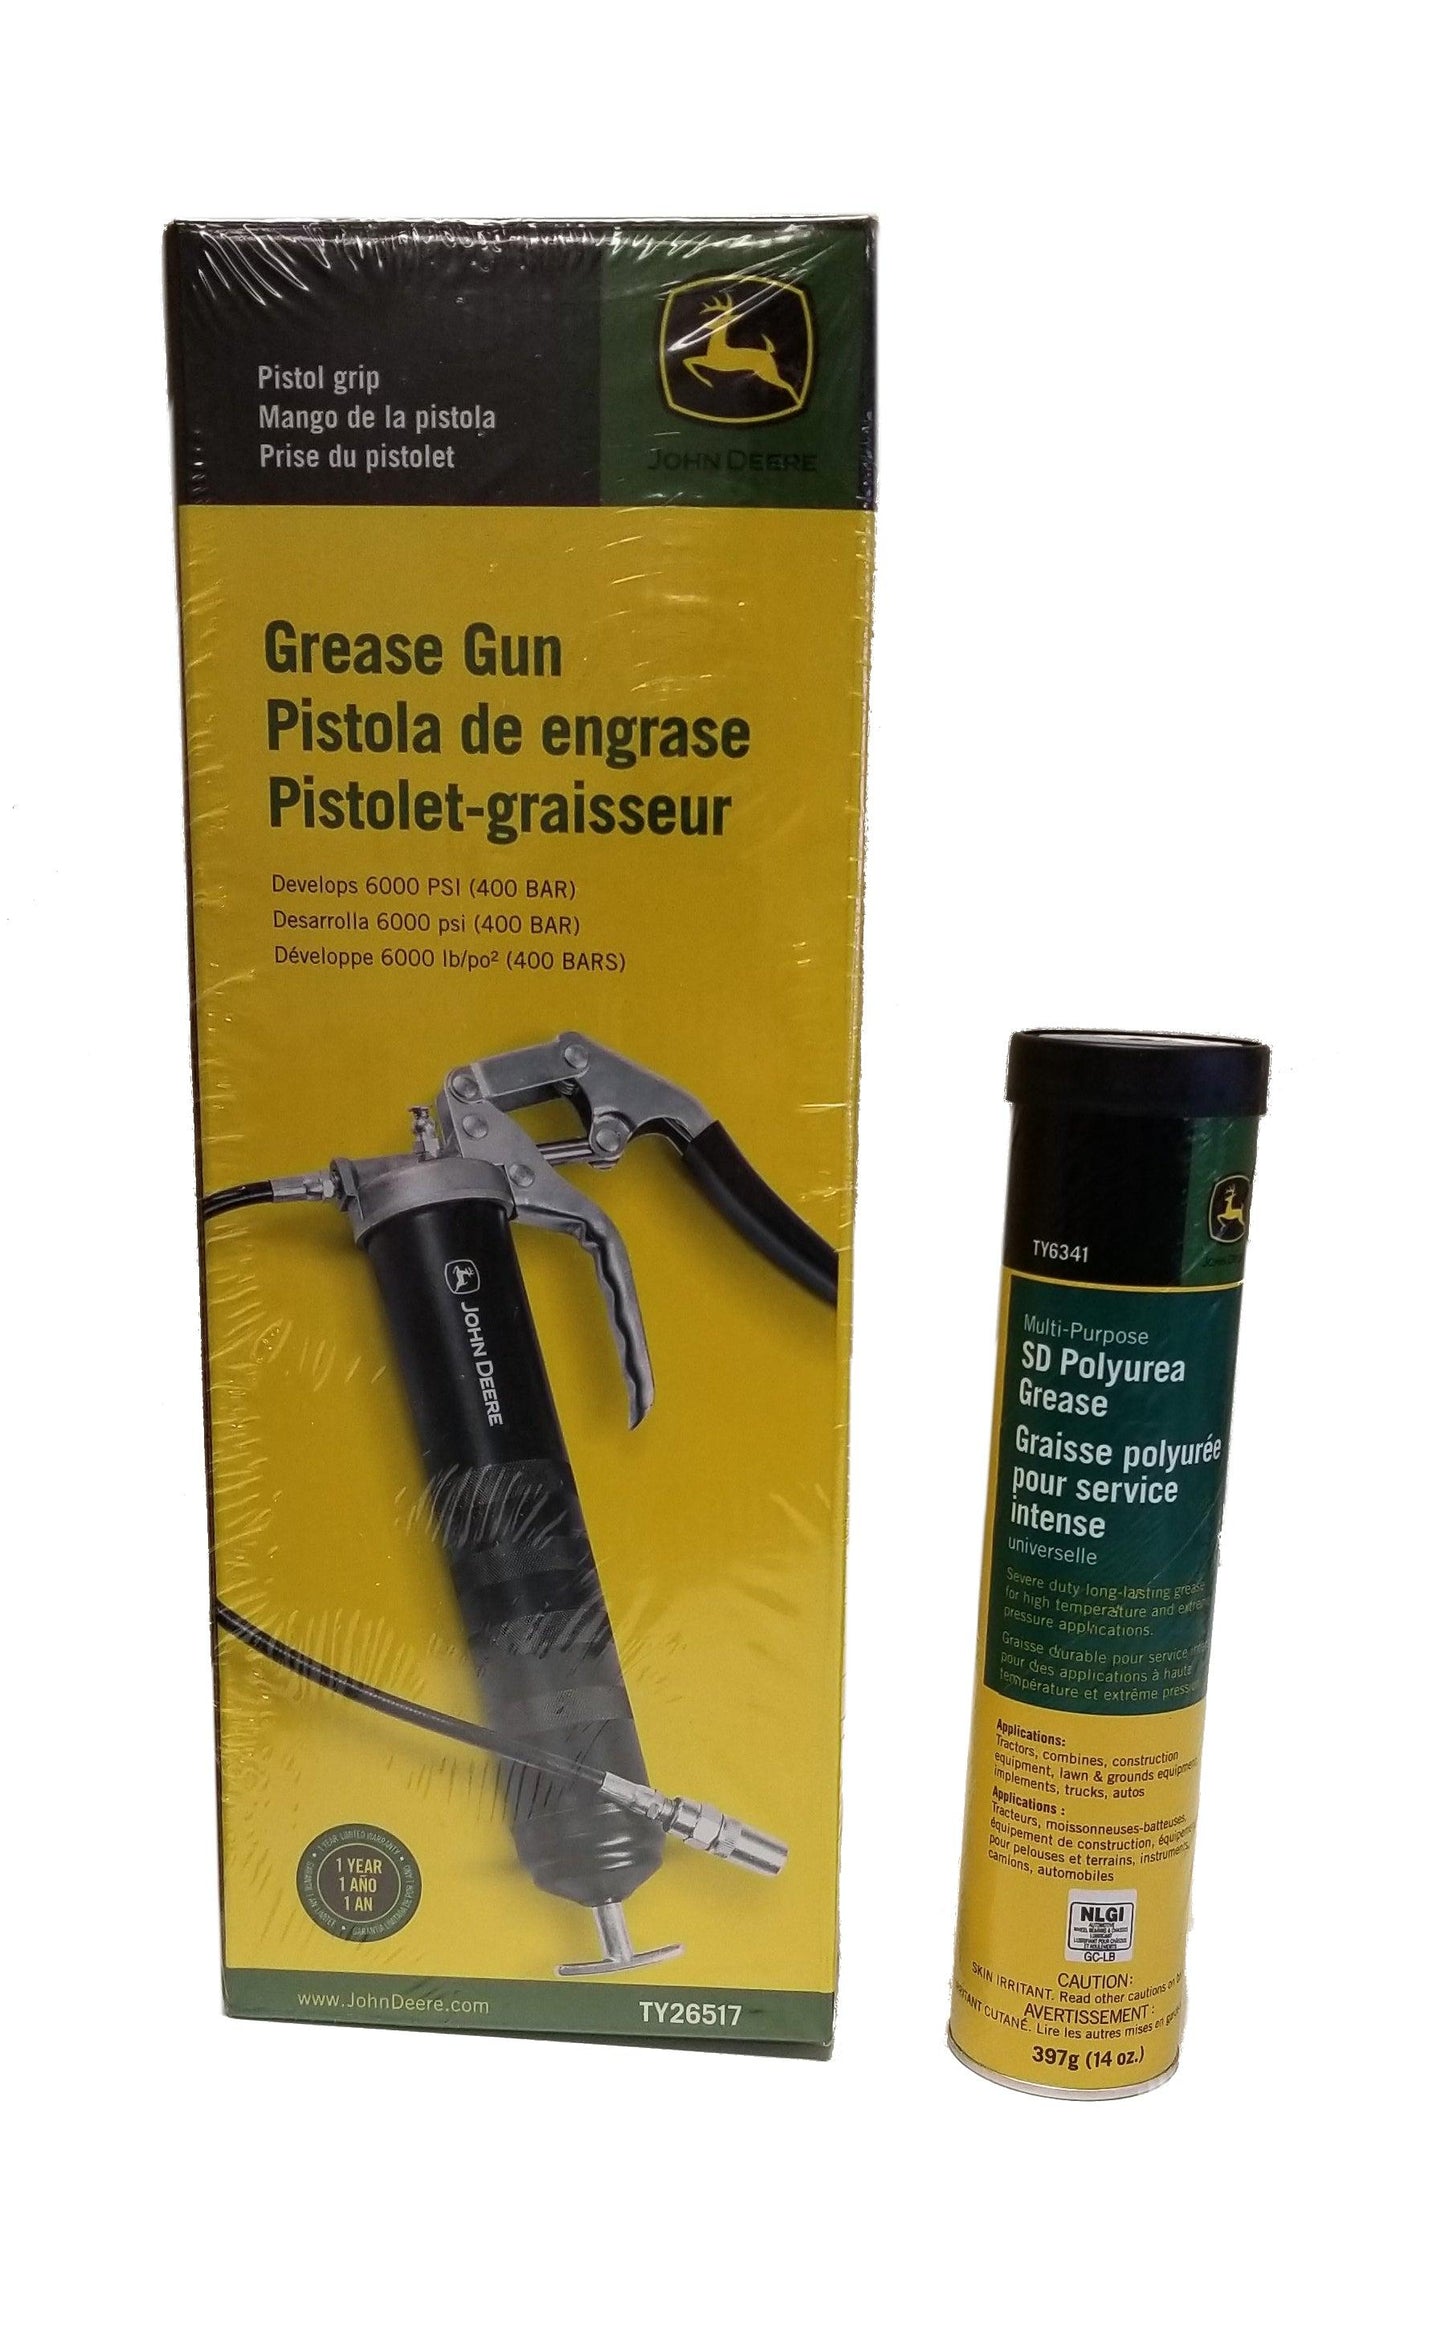 John Deere Pistol Grip Grease Gun with Multi-Purpose SD Polyurea Grease - TY26517A